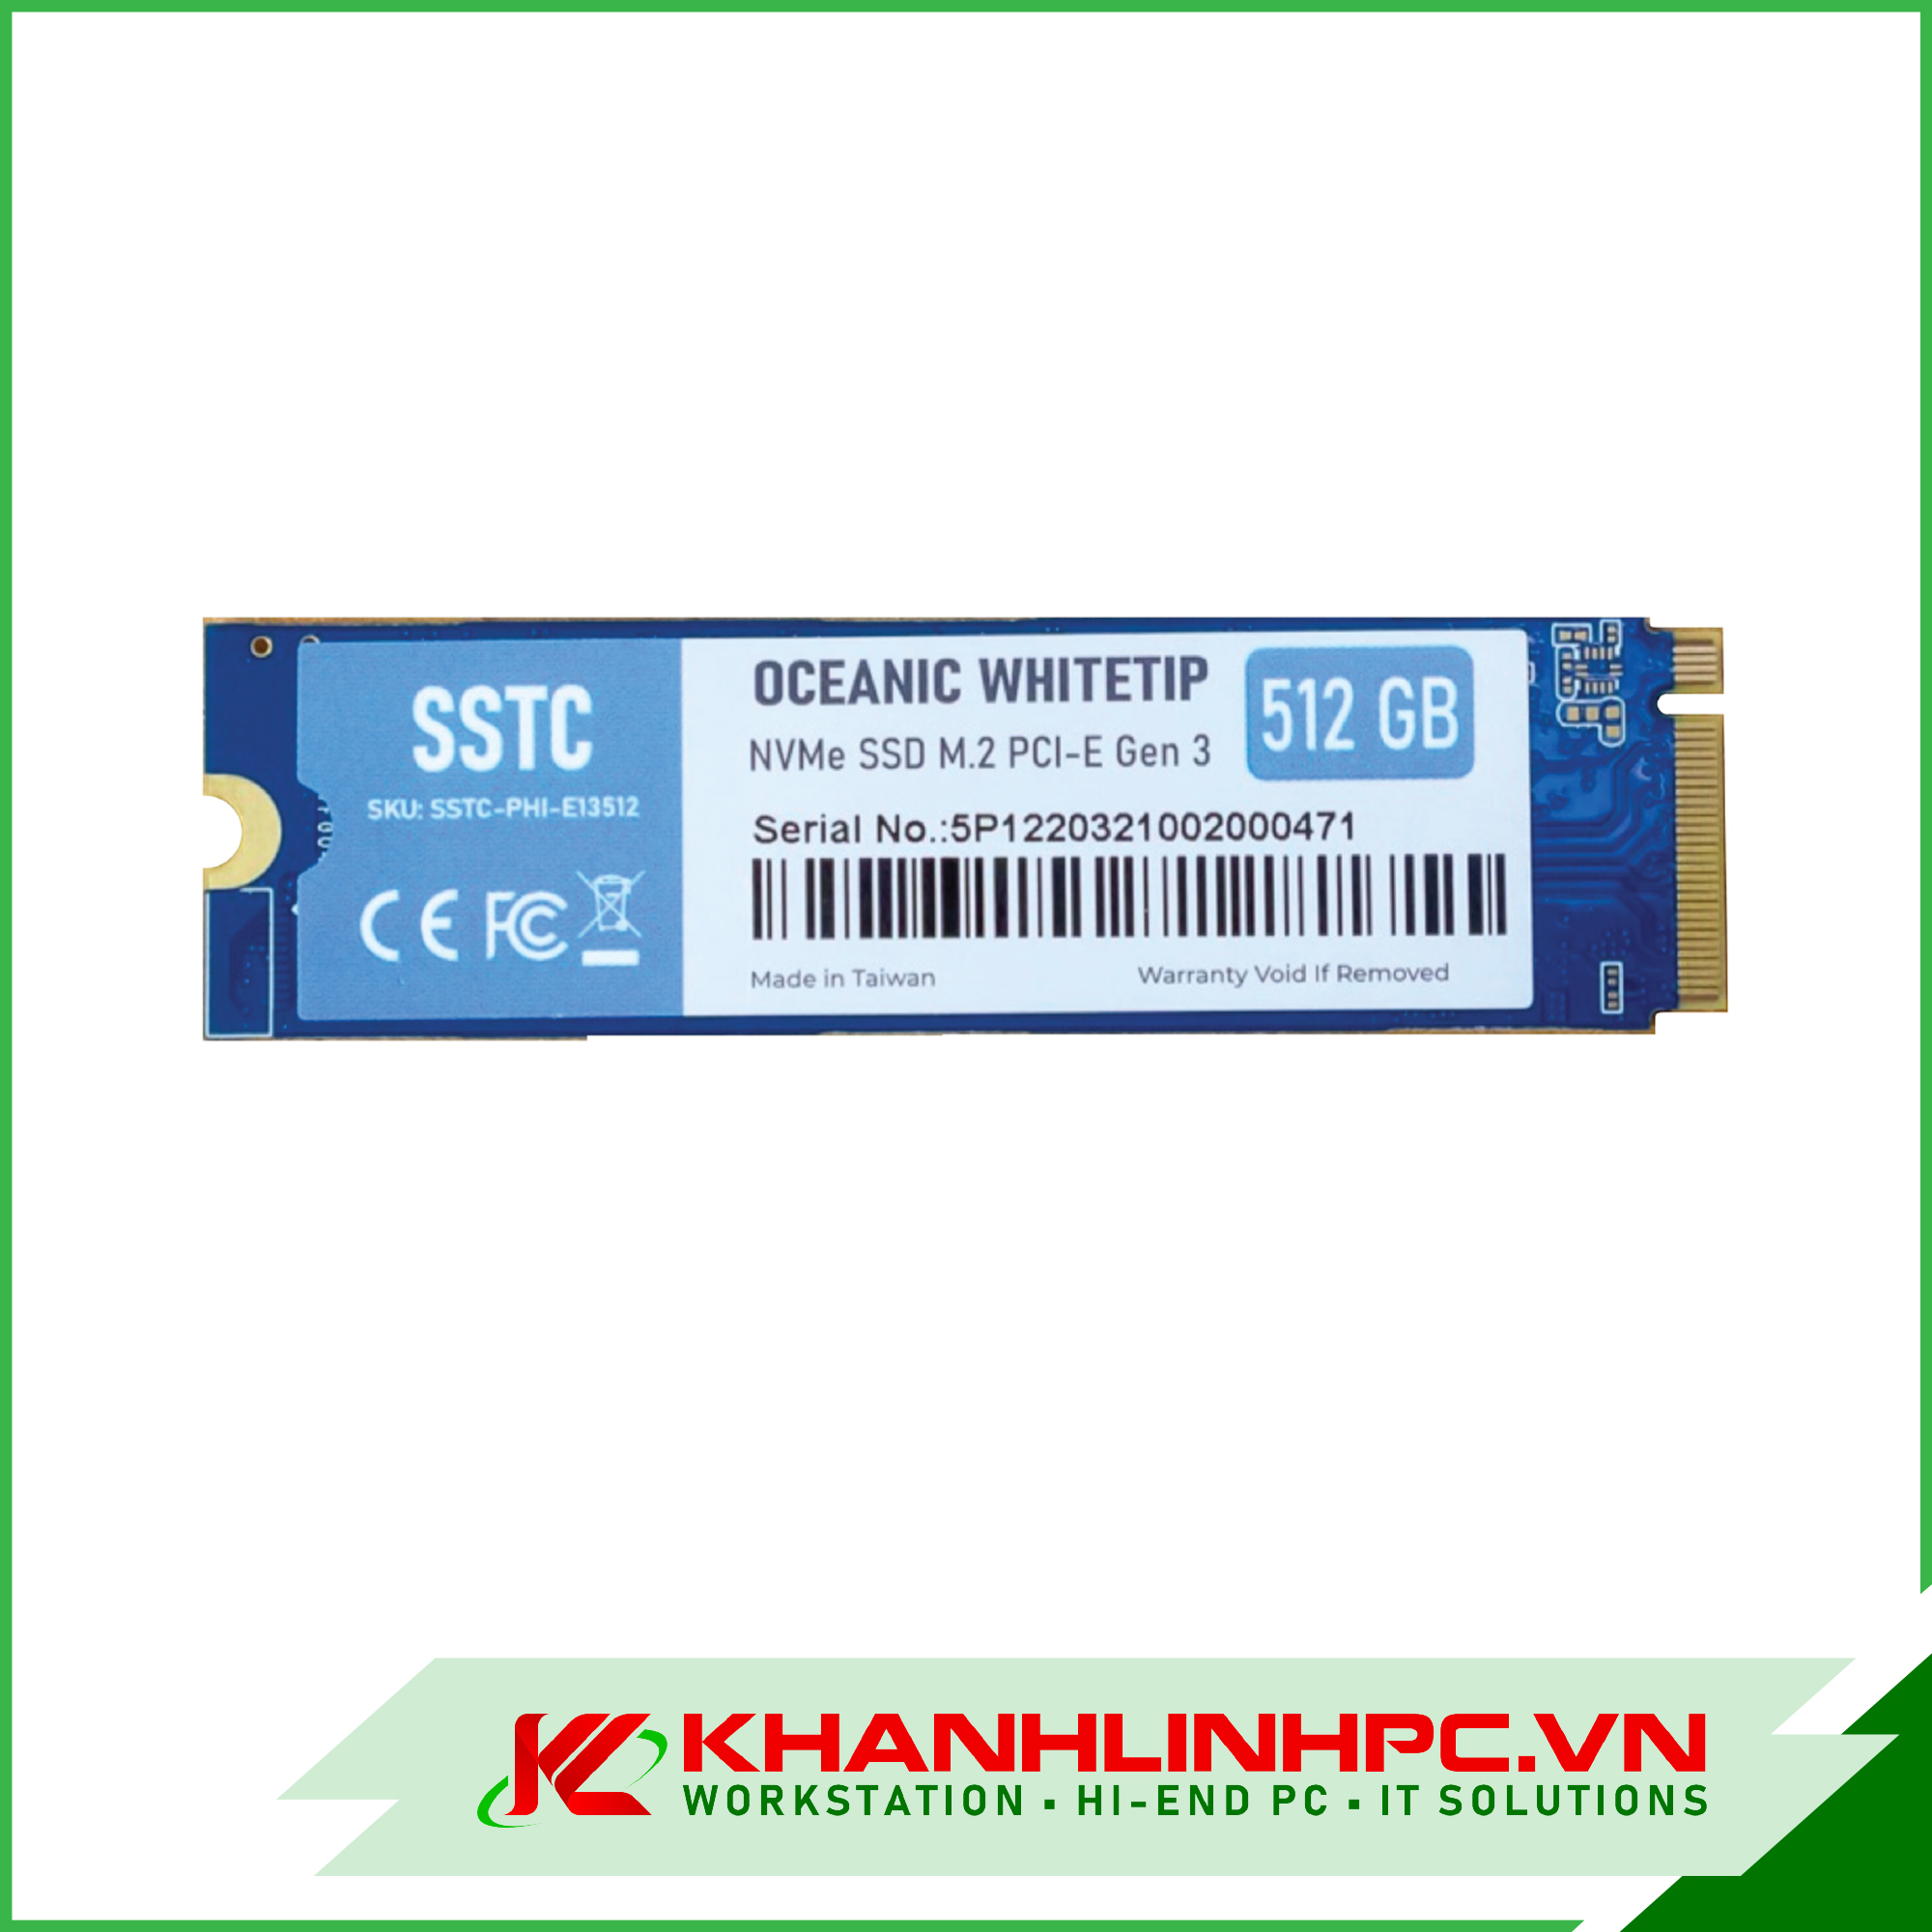 SSD 512G SSTC OCEANIC Whitetip M.2 NVMe PCIe Gen 3X 4